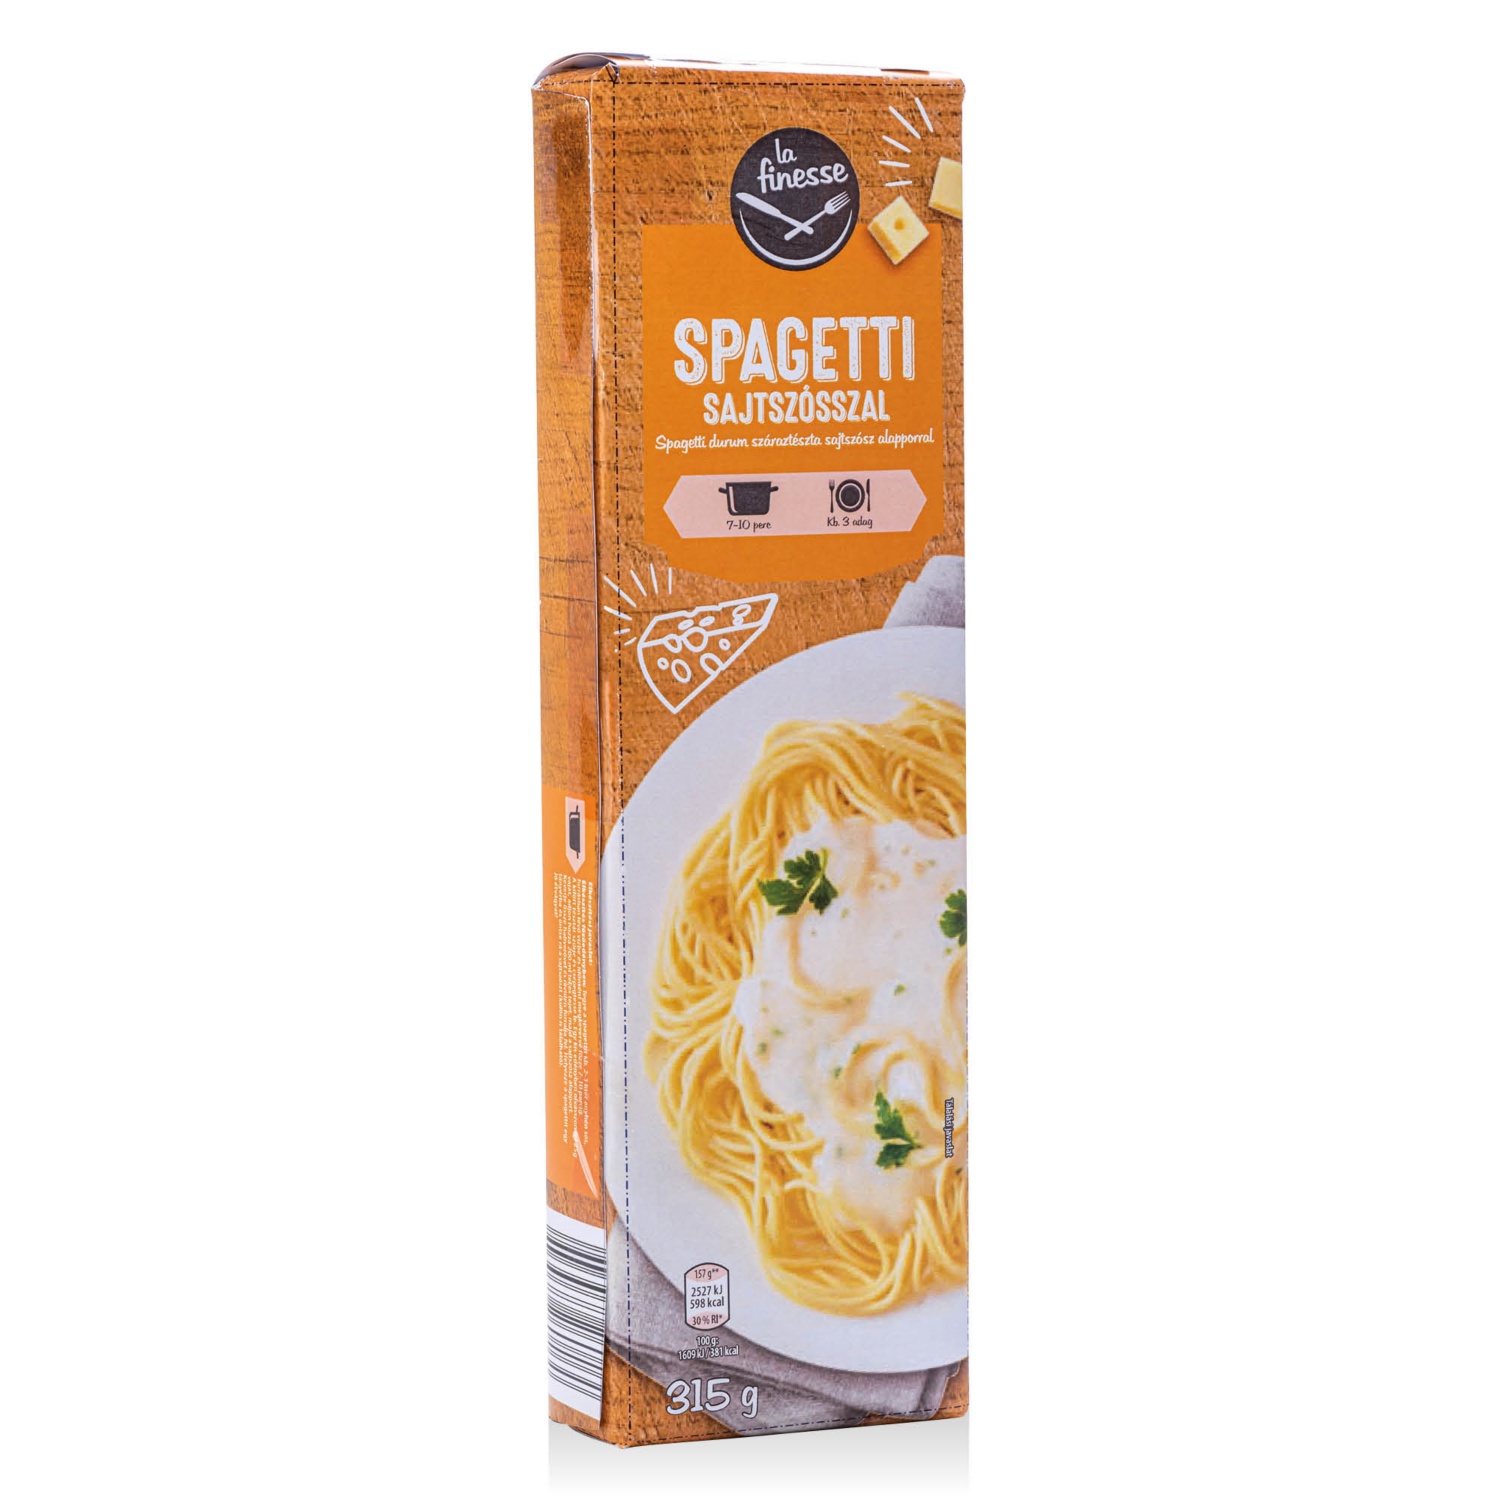 LA FINESSE Spagetti szósszal, 315 g, sajtszósszal